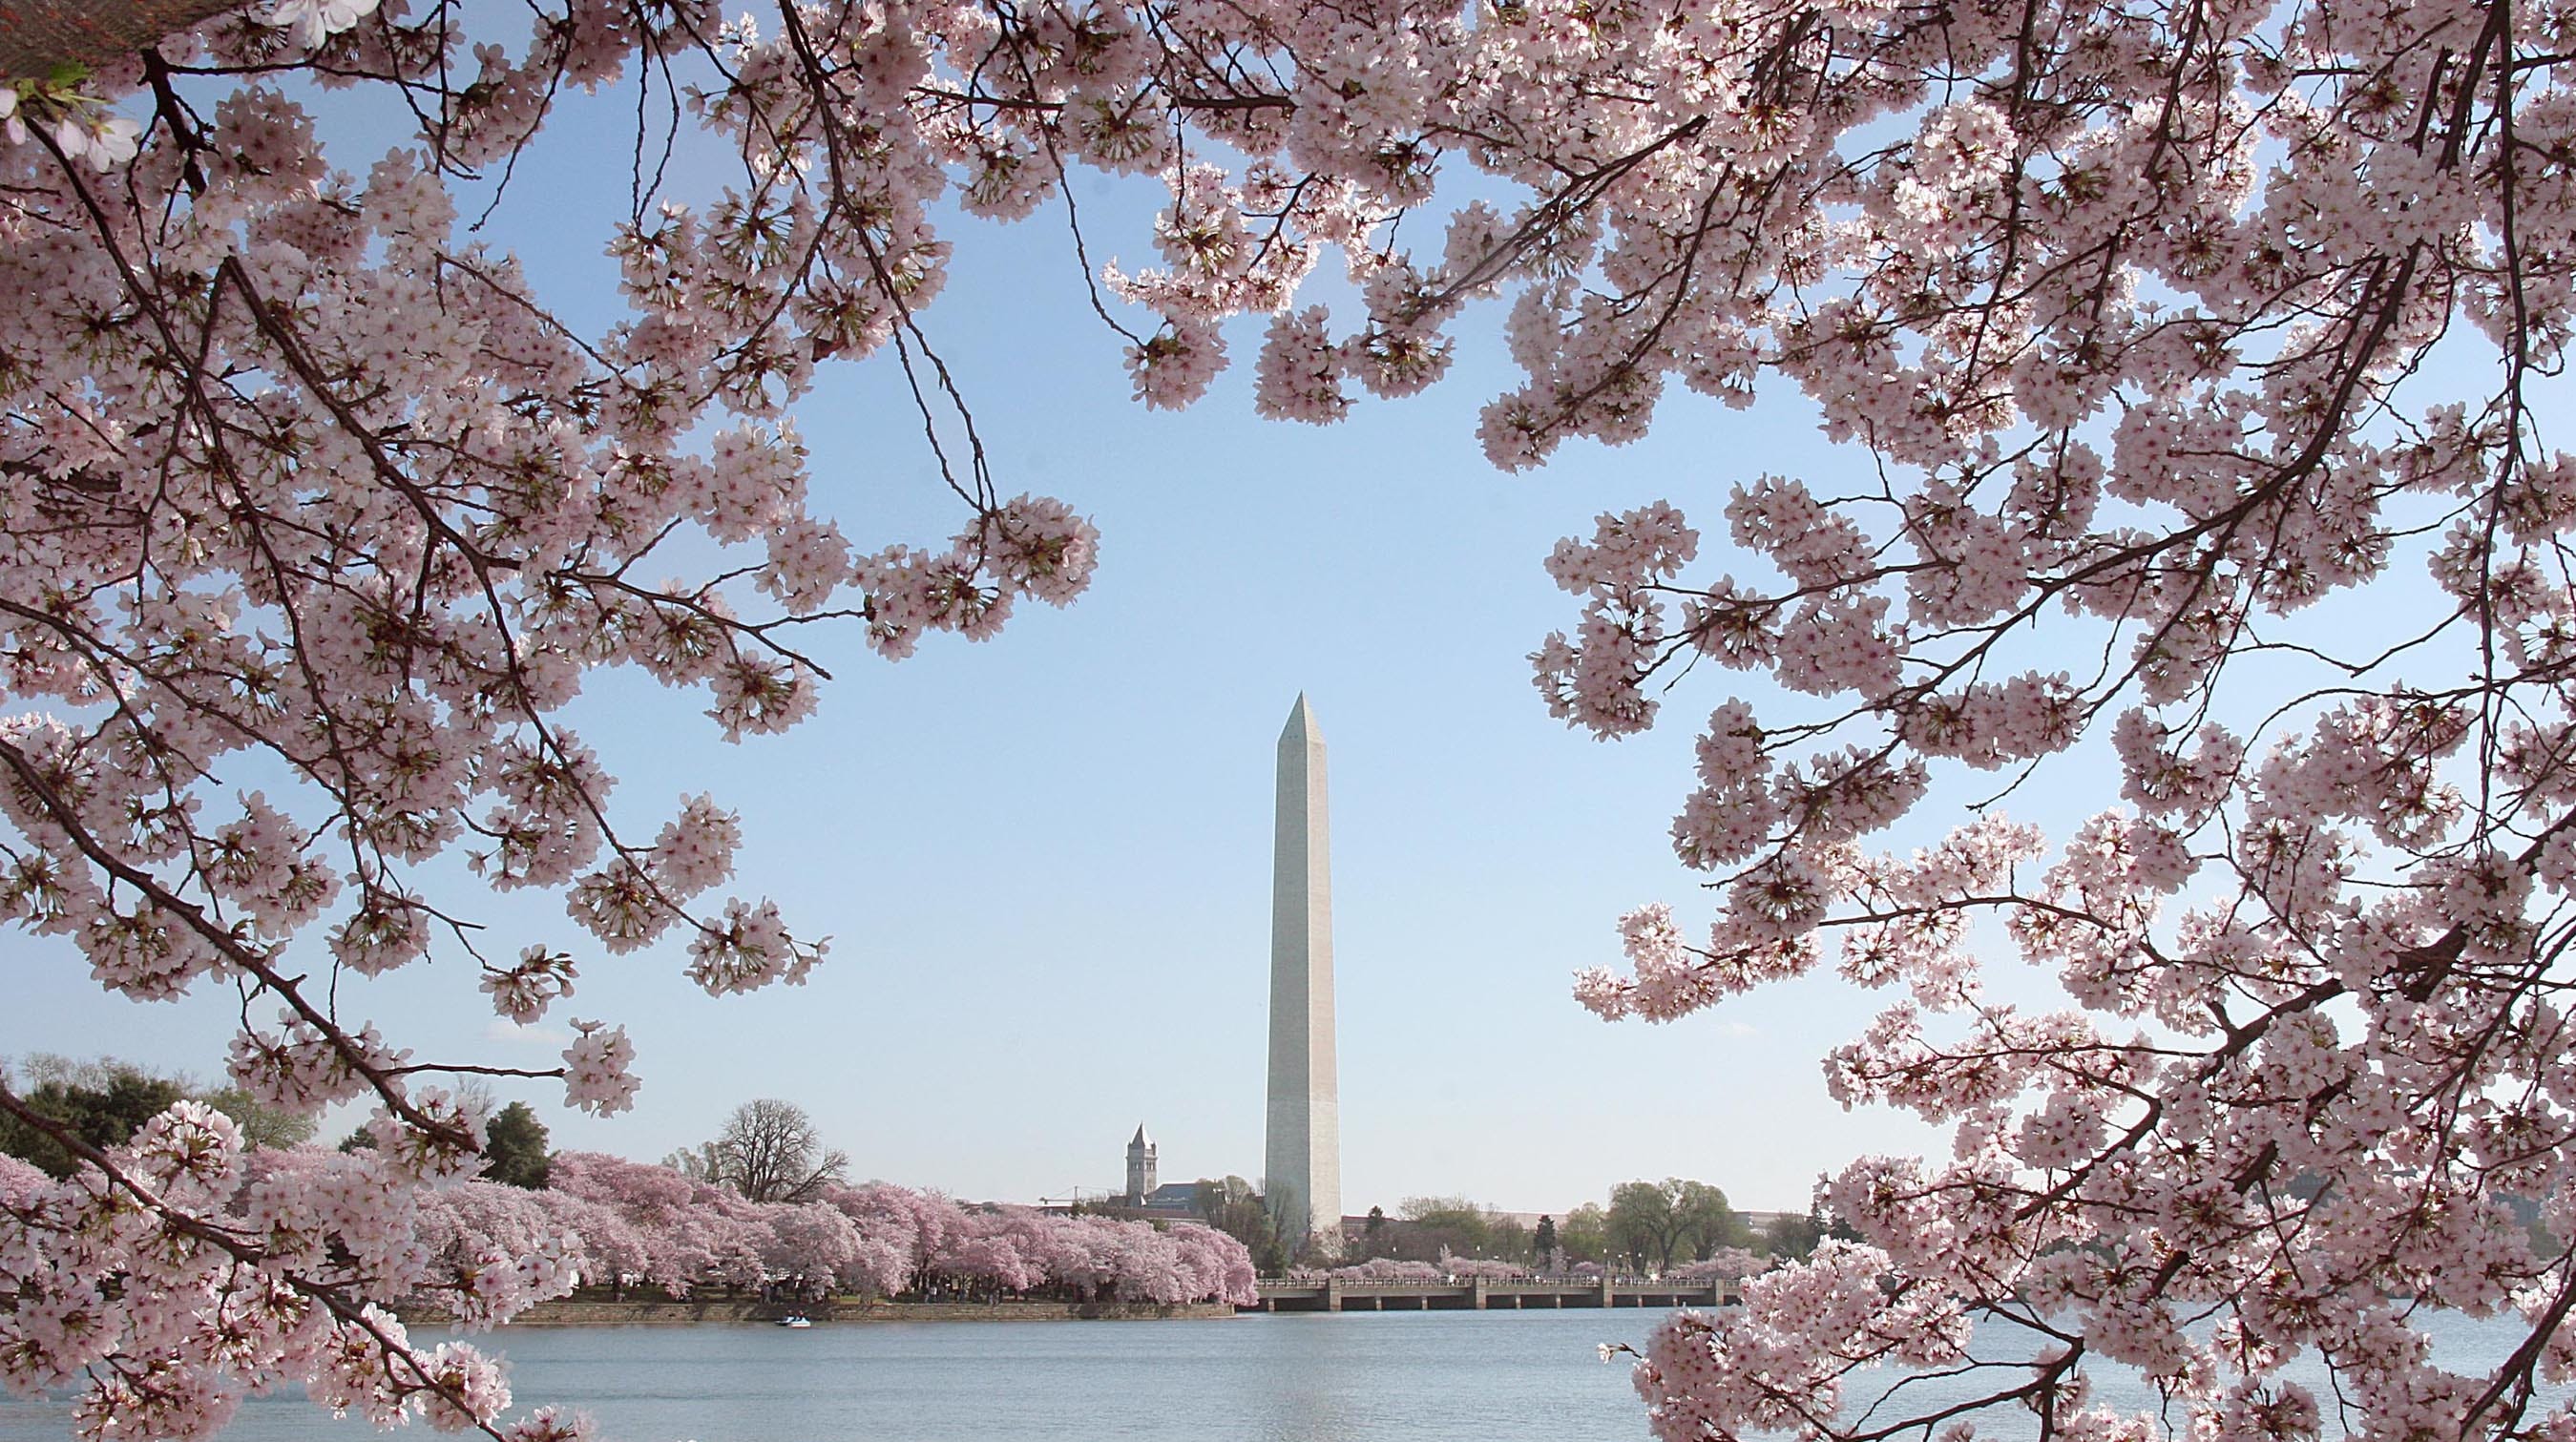 Washington D C Peak Cherry Blossom Dates Prediction April 3 6